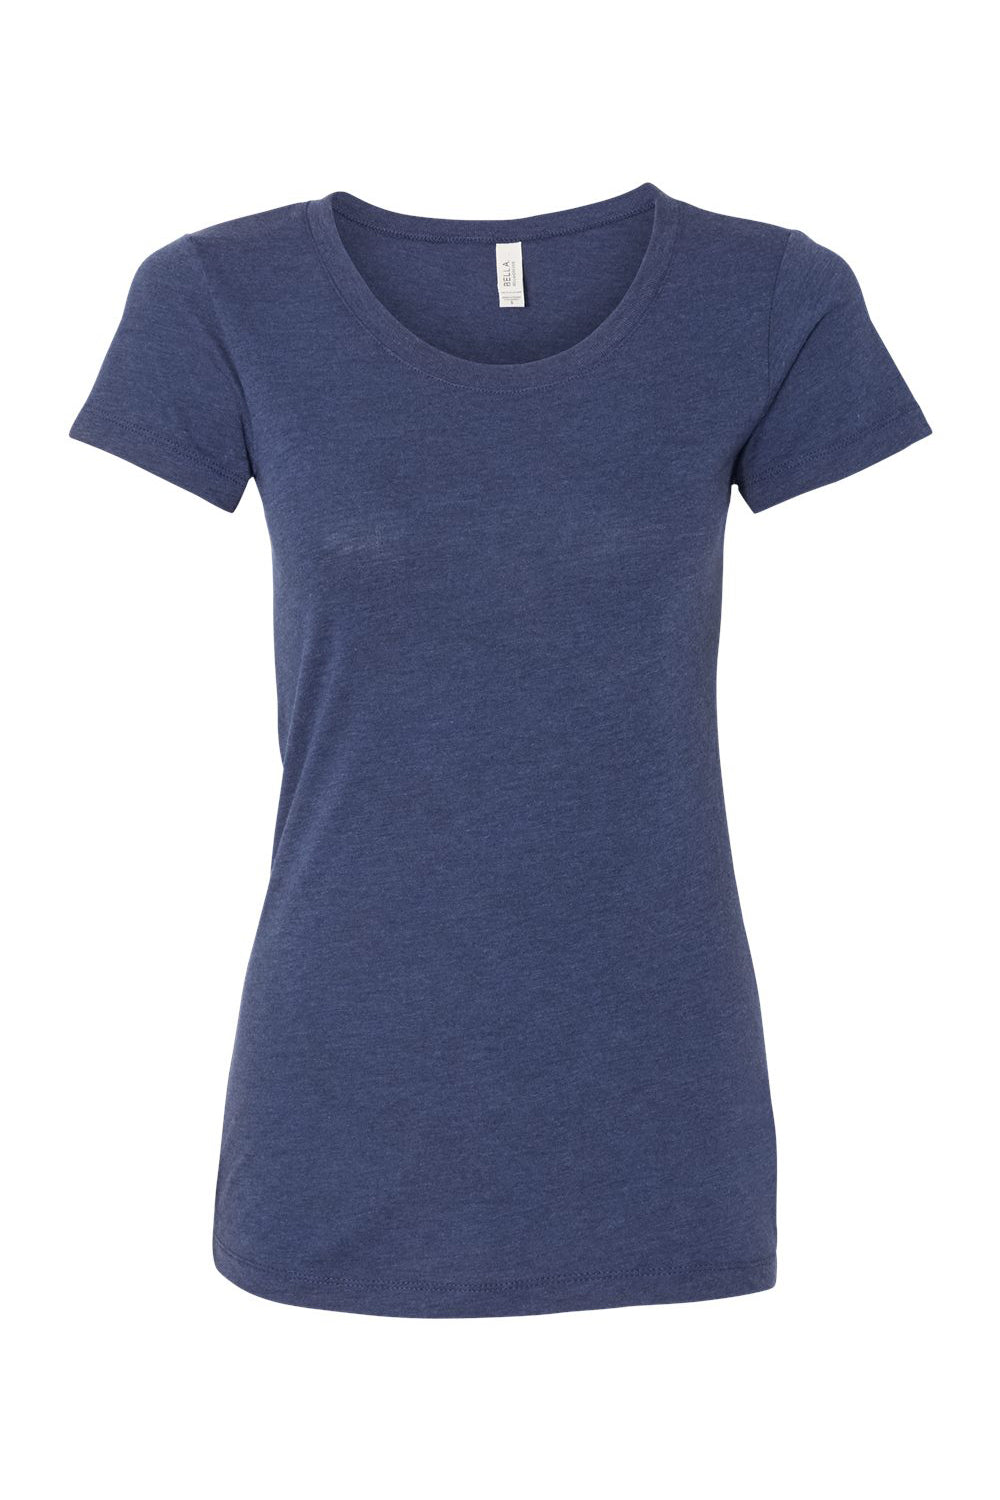 Bella + Canvas BC8413/B8413/8413 Womens Short Sleeve Crewneck T-Shirt Navy Blue Flat Front